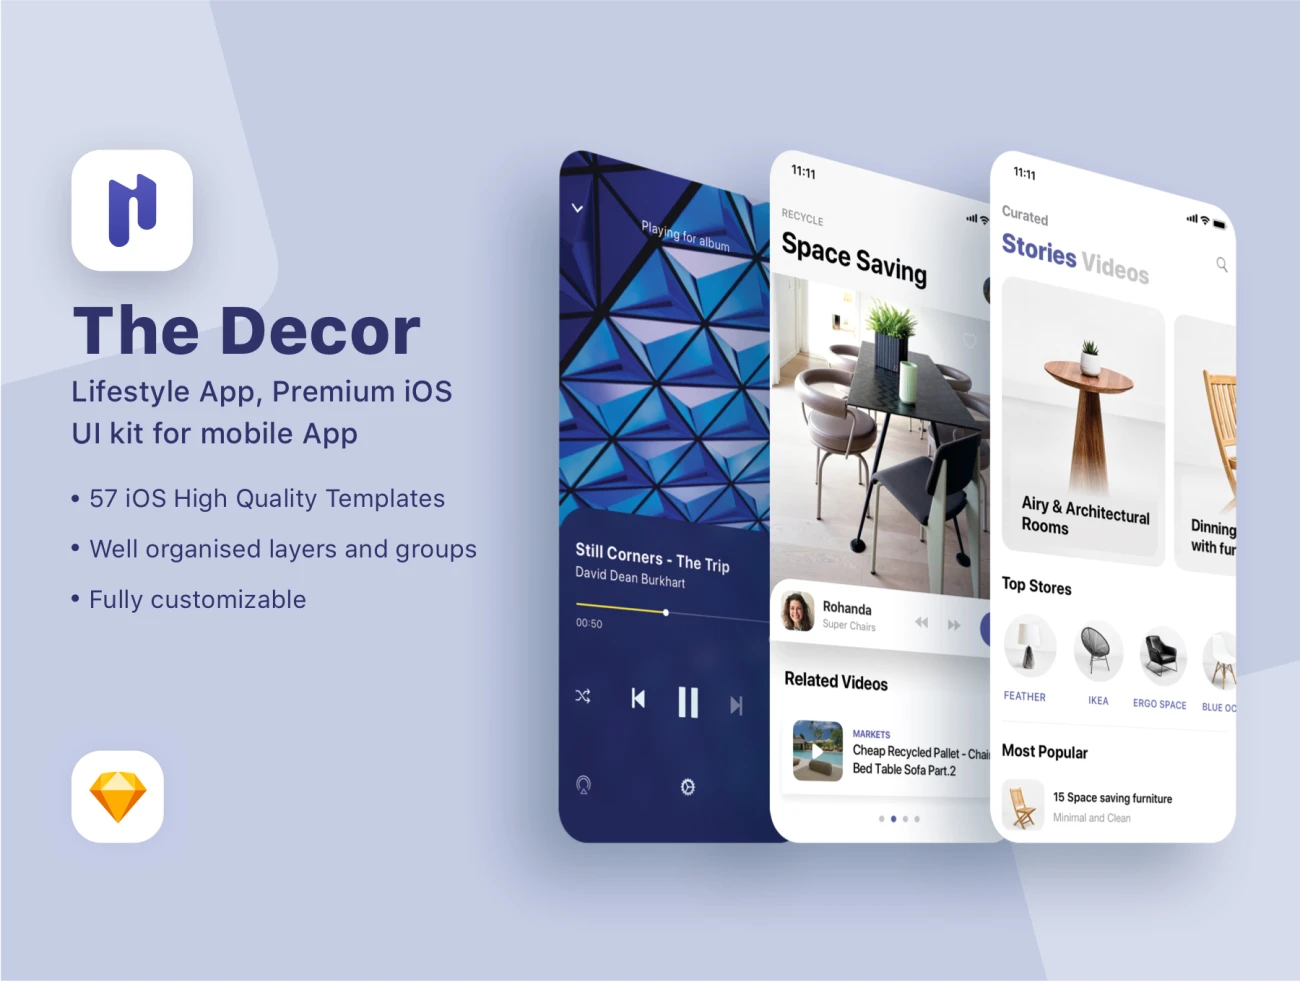 The Decor, Lifestyle App 音乐播放器家具电商语音播客 生活方式app应用-UI/UX、ui套件、列表、卡片式、应用、播放器、注册、海报、登录页、表单-到位啦UI